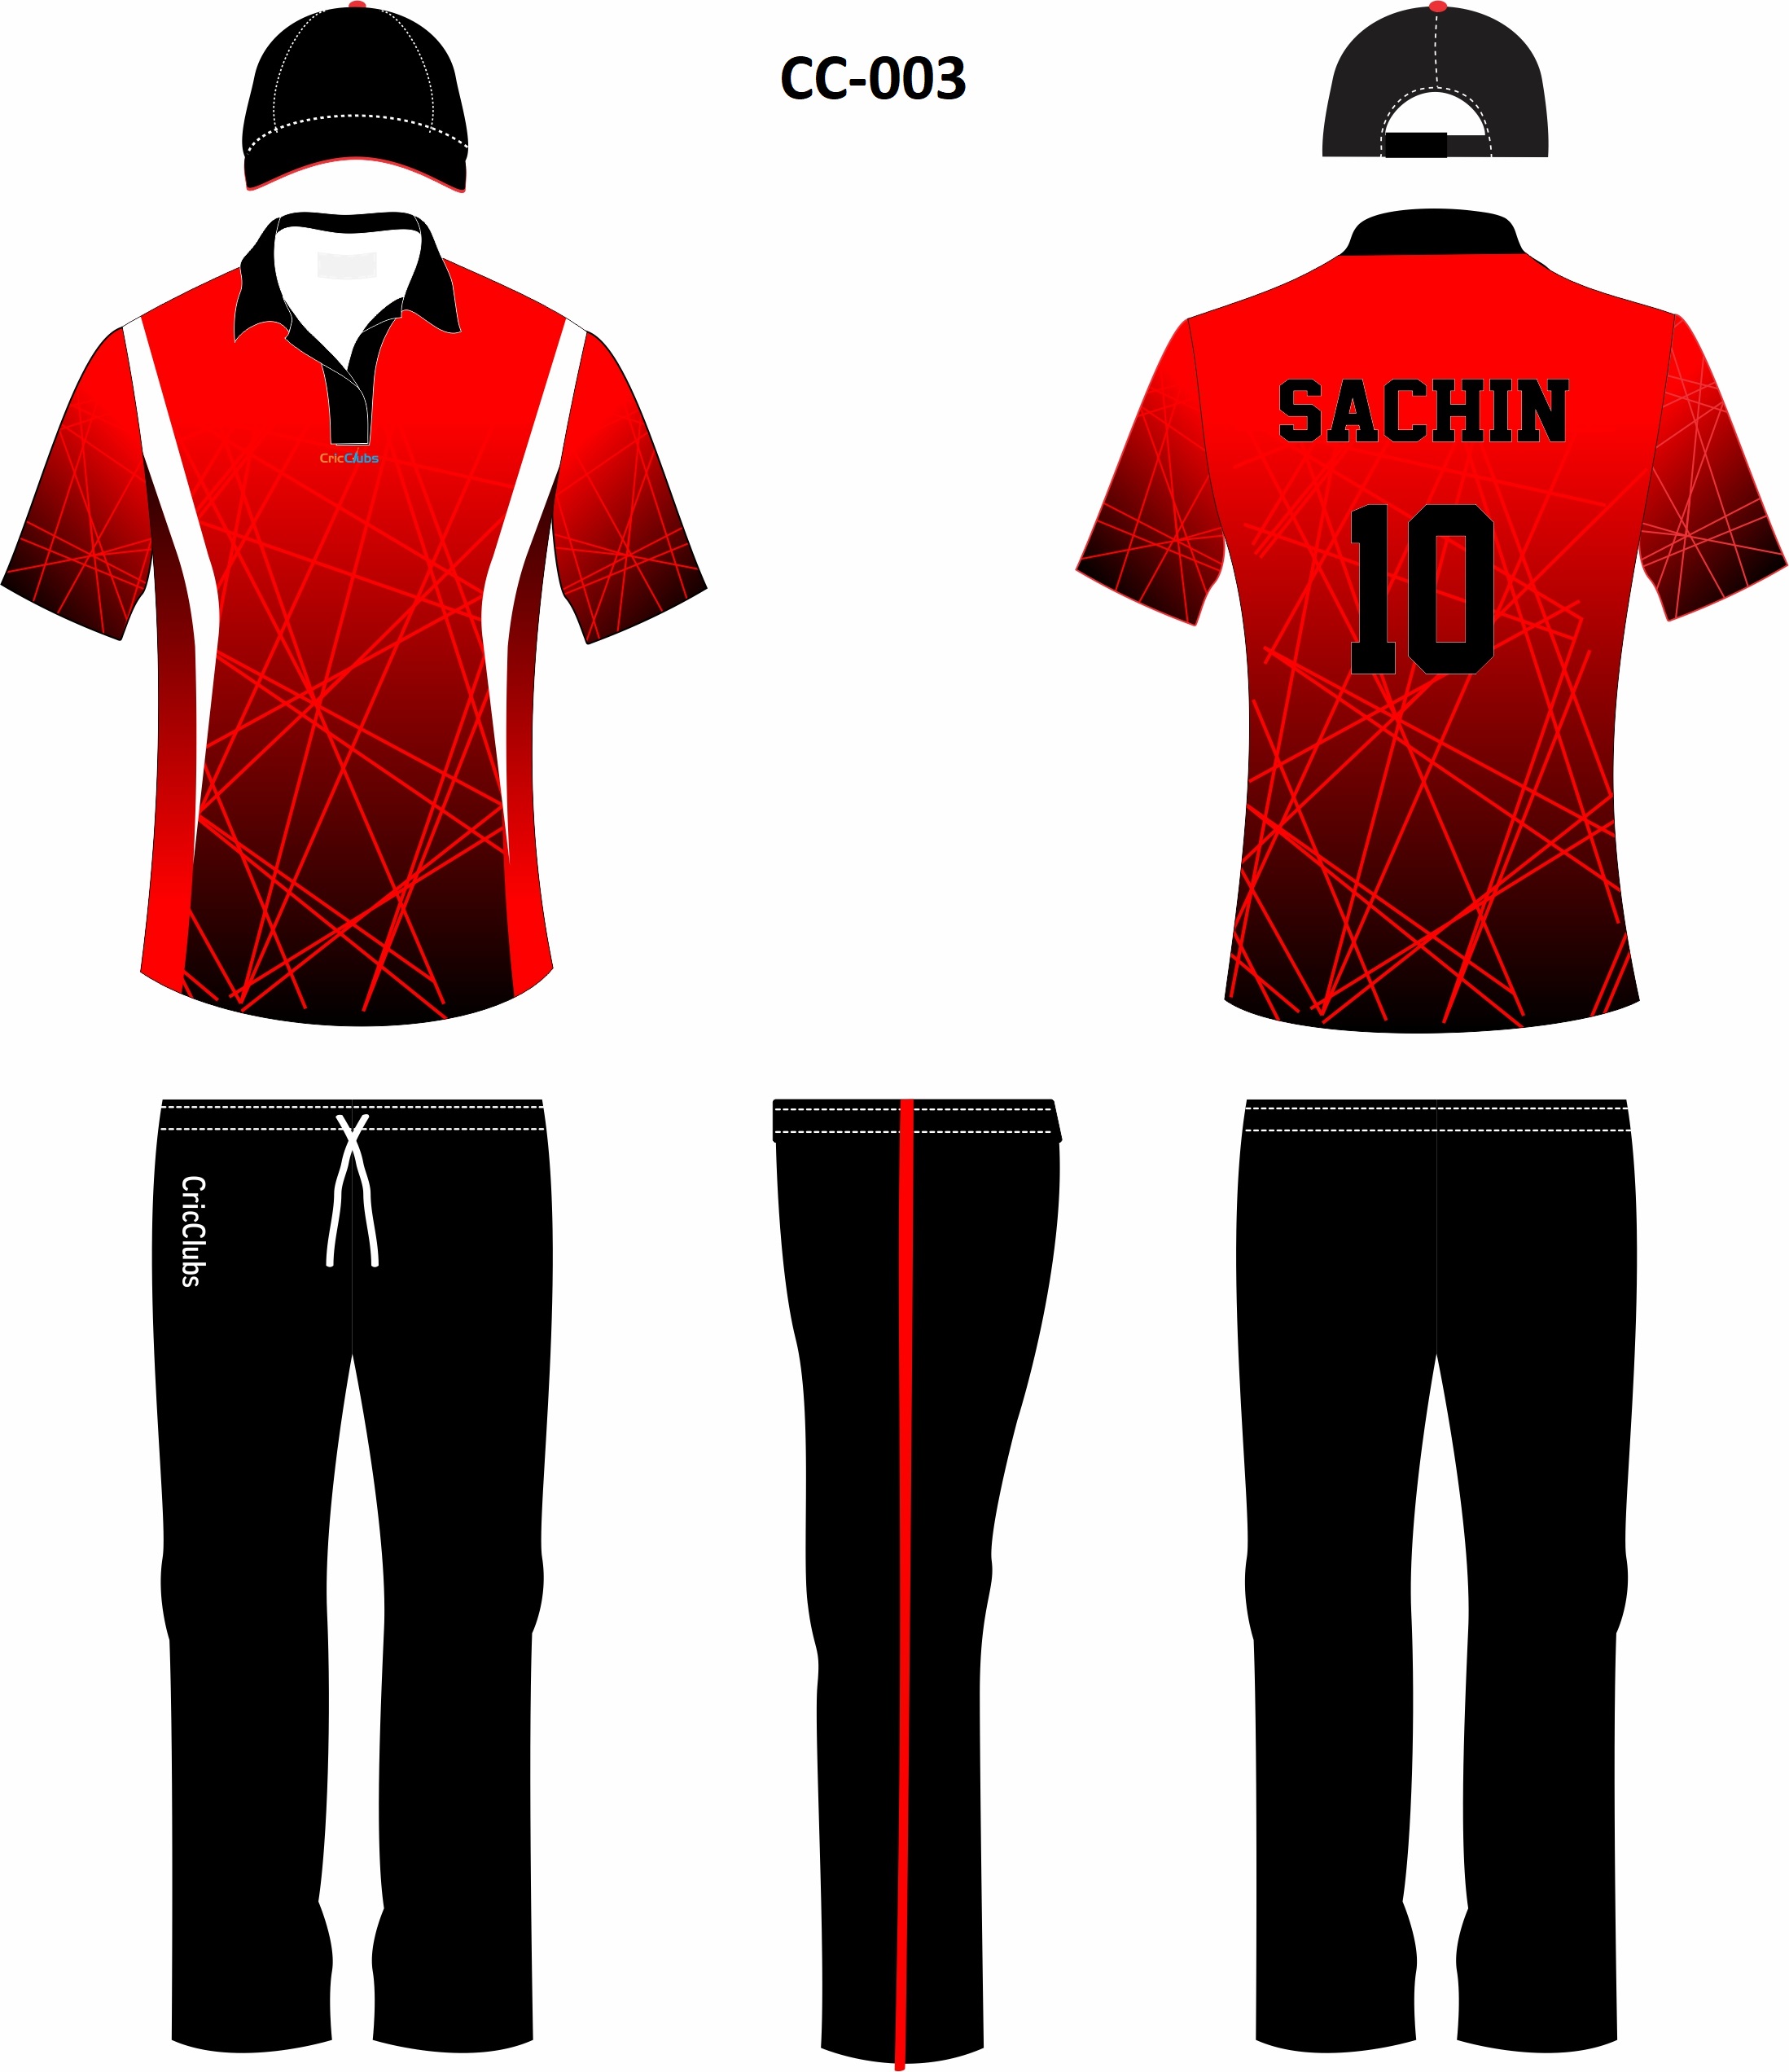 new cricket jersey design 2019